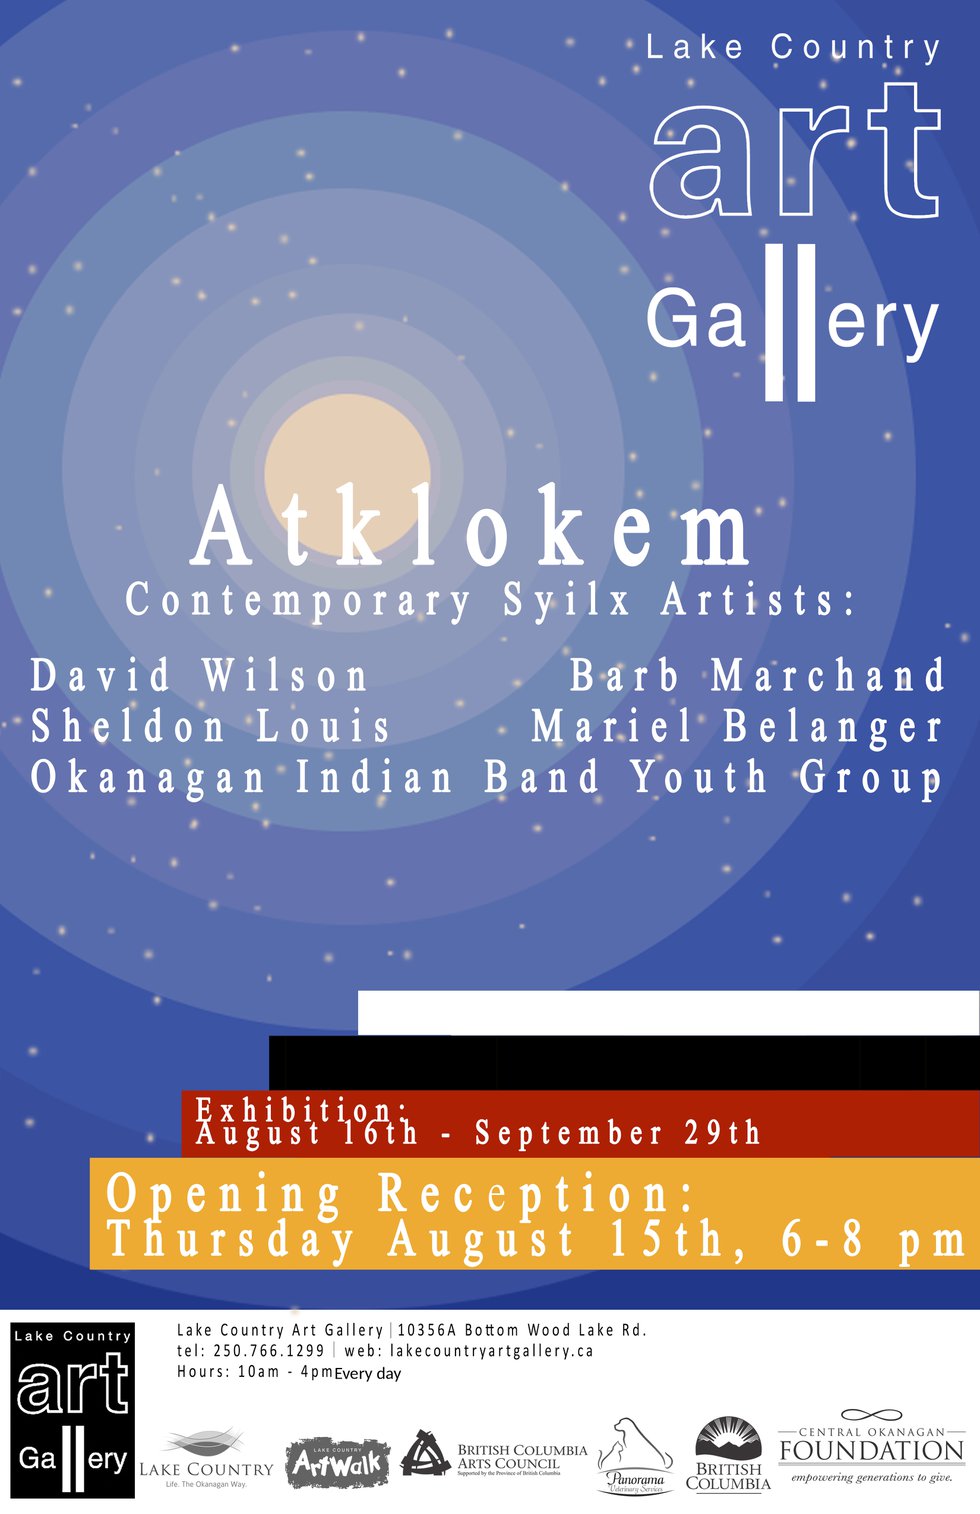 Lake Country Art Gallery, "Atklokem: Contemporary Syilx Artists," 2019